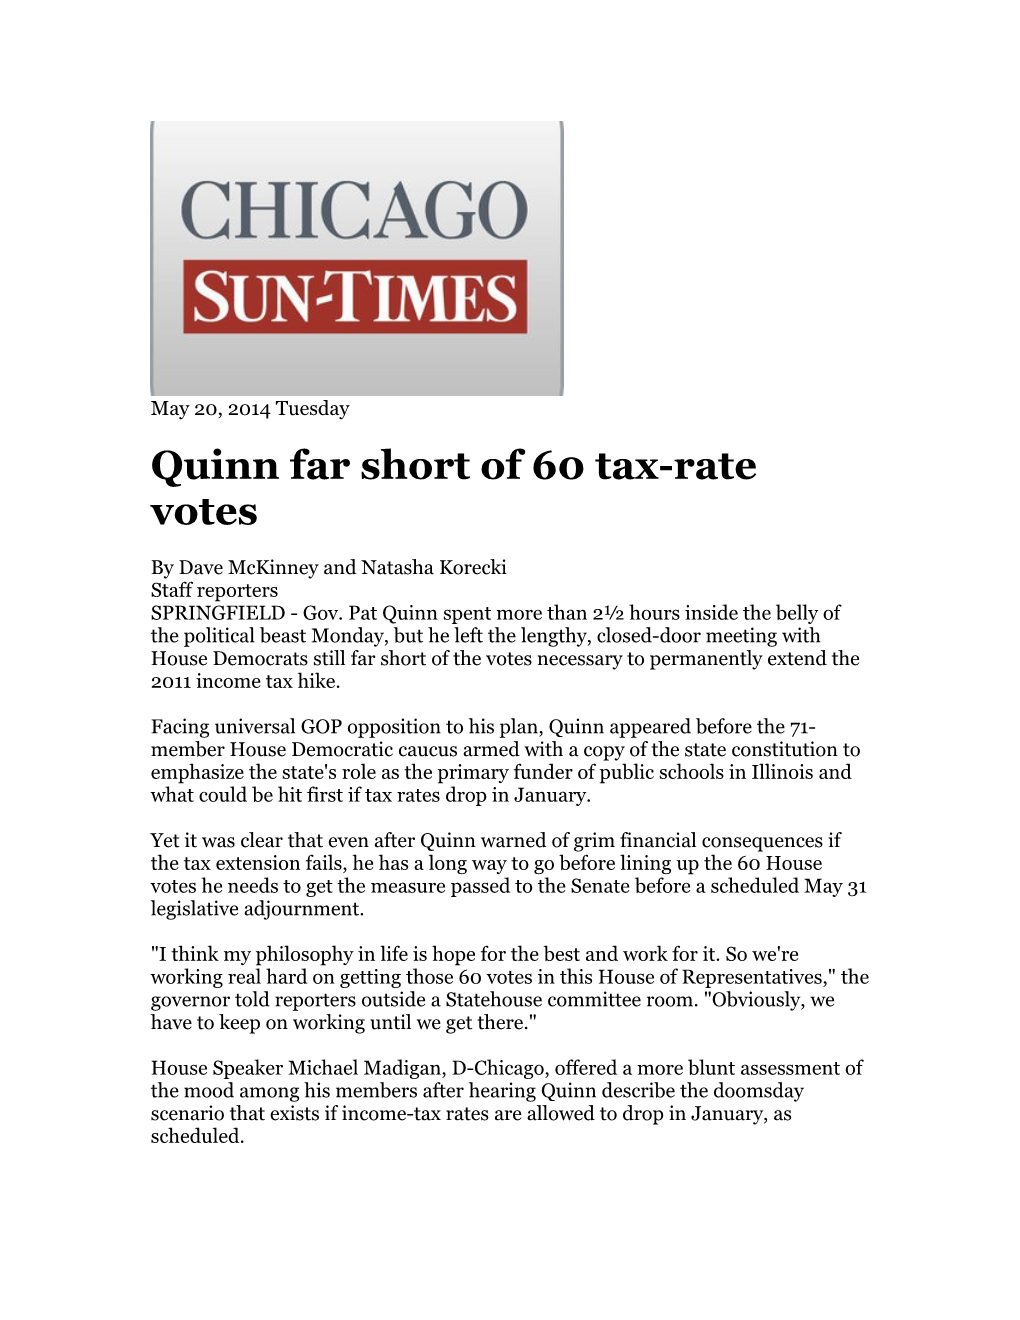 Quinn Far Short of 60 Tax-Rate Votes